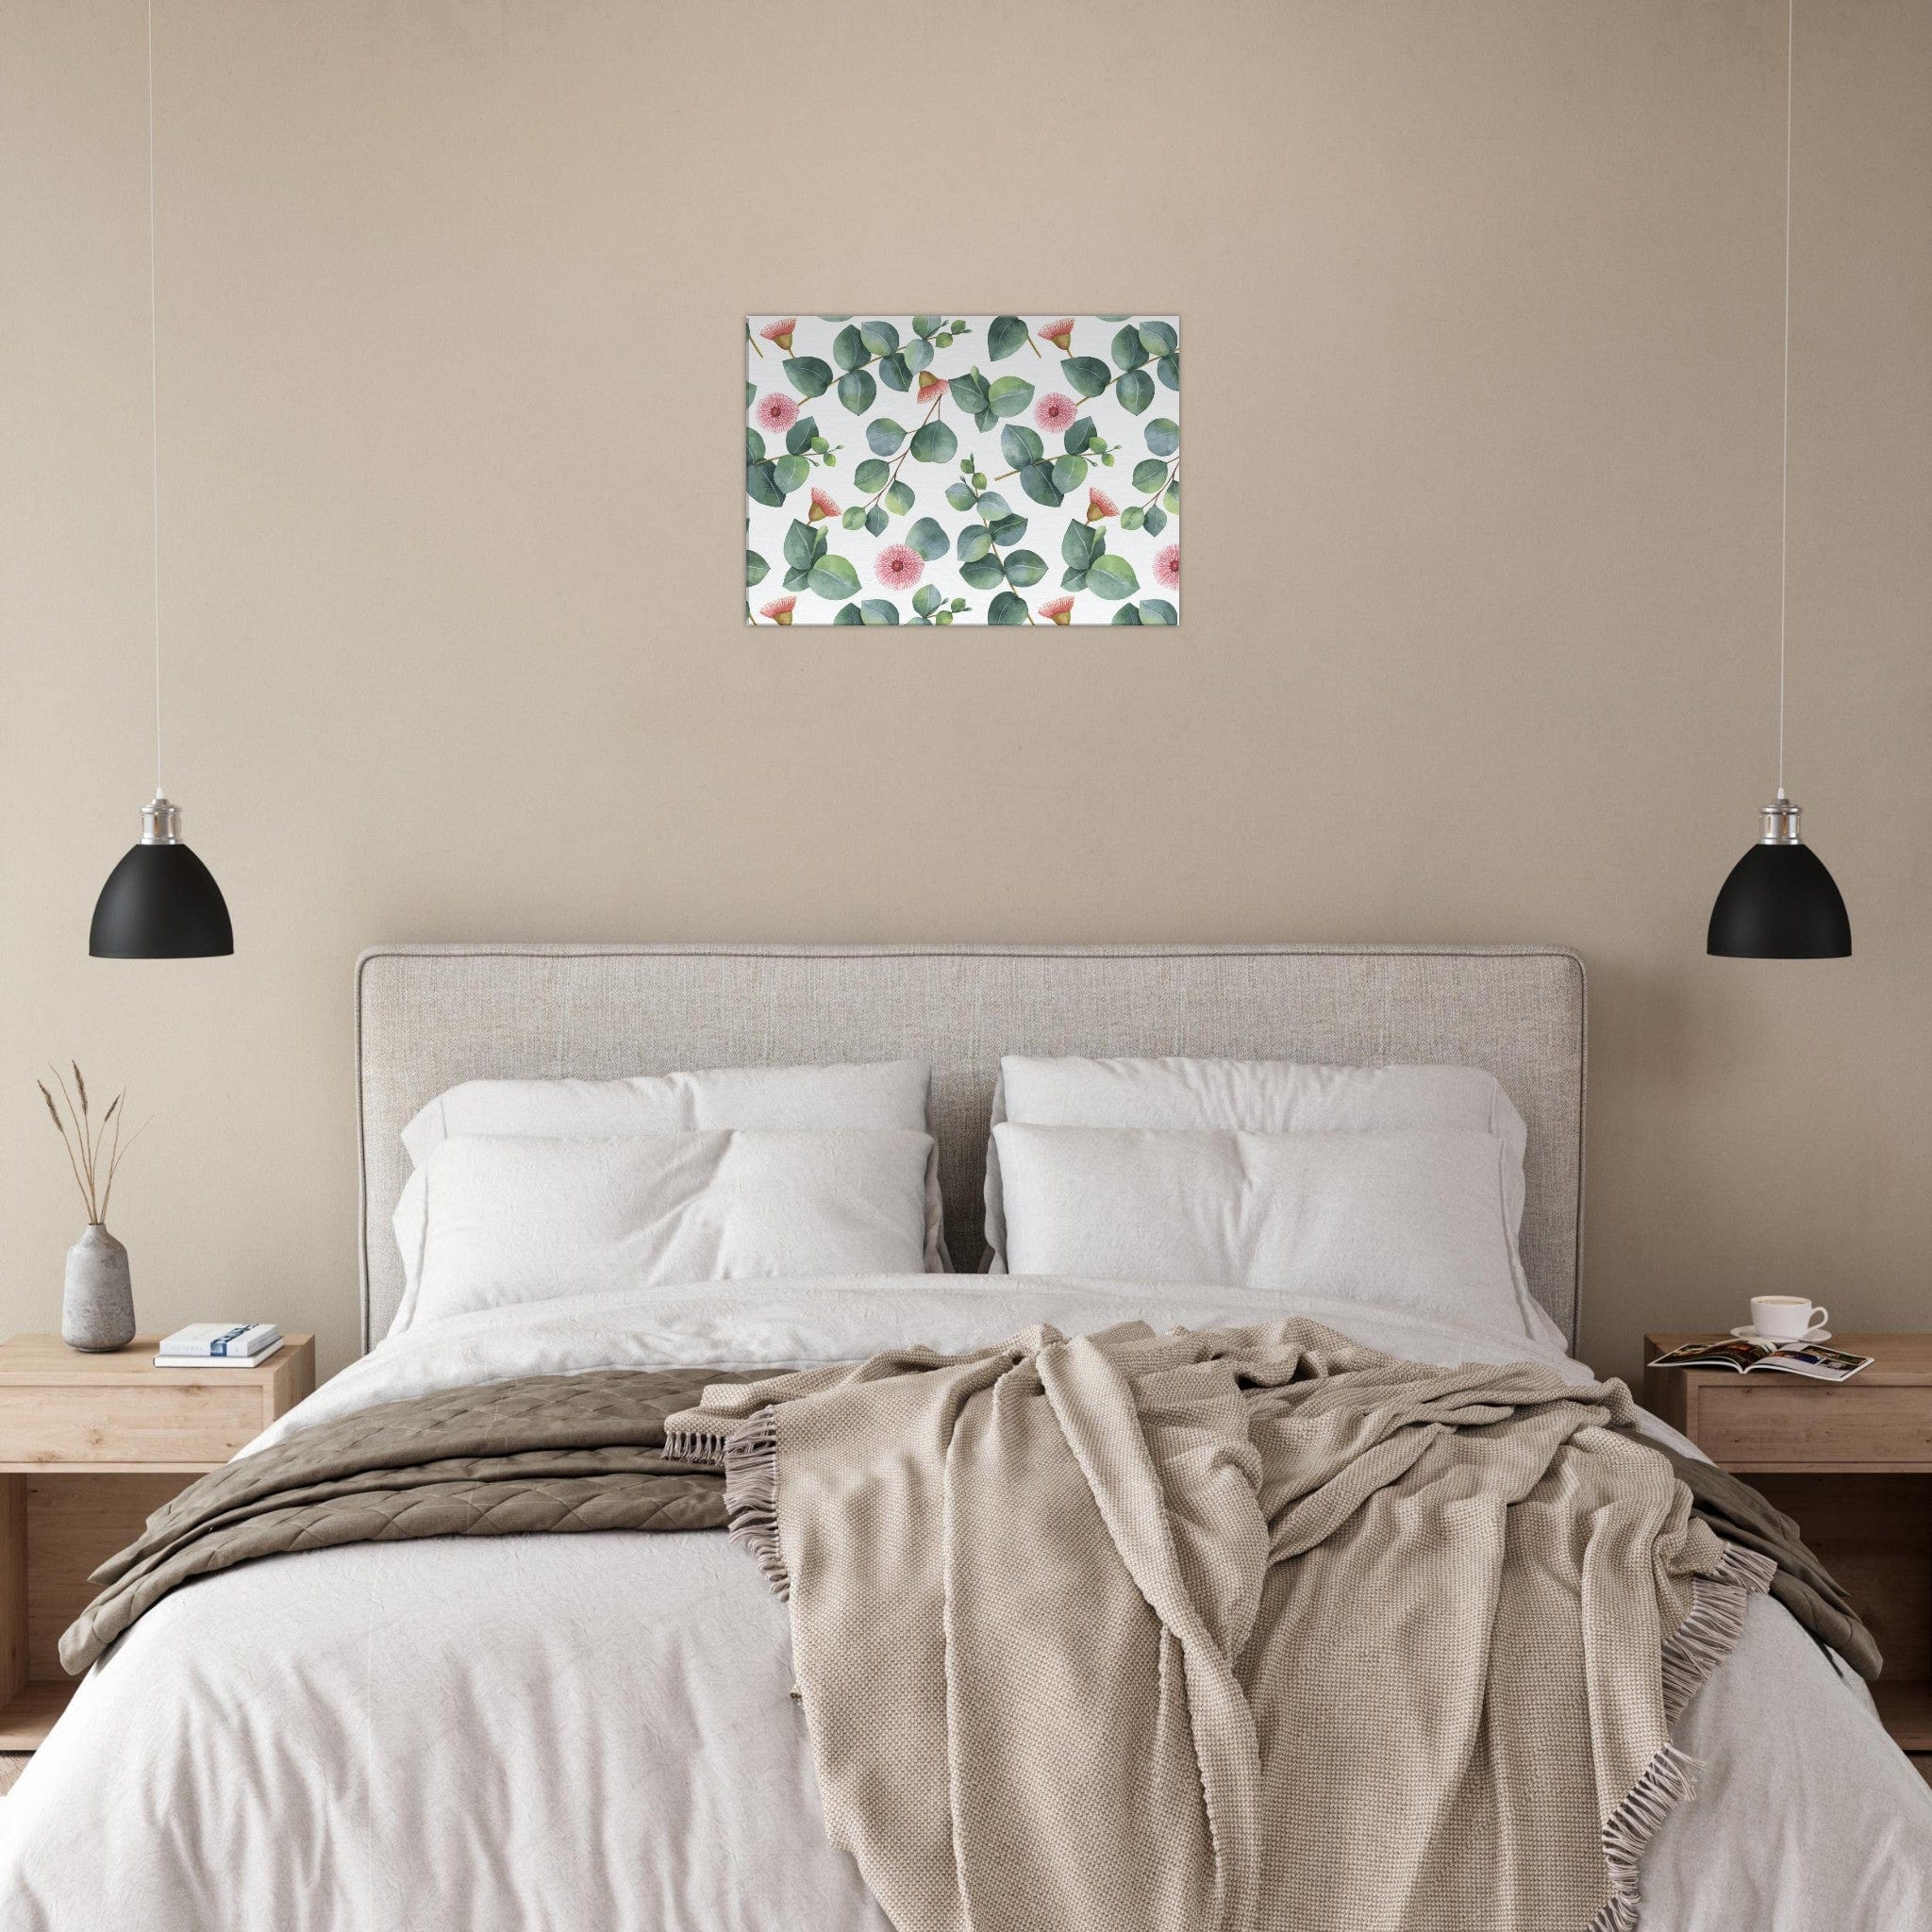 Little Squiffy Print Material 50x70 cm / 20x28″ / Horizontal Eucalyptus Blossom Canvas Wall Art